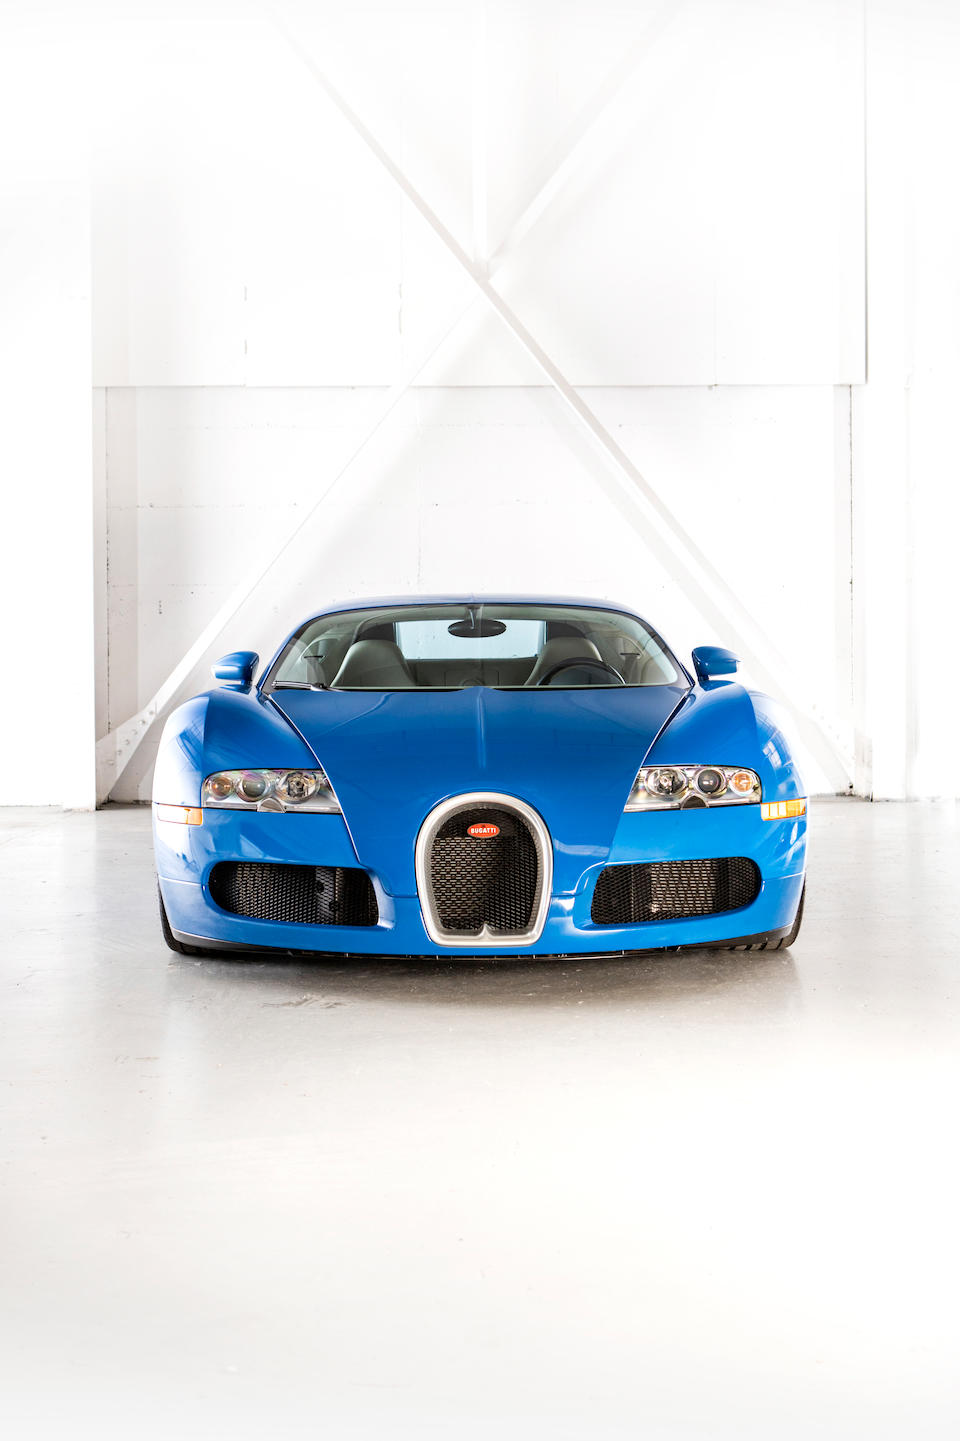 Bugatti Veyron Eb 16.4 Wallpapers